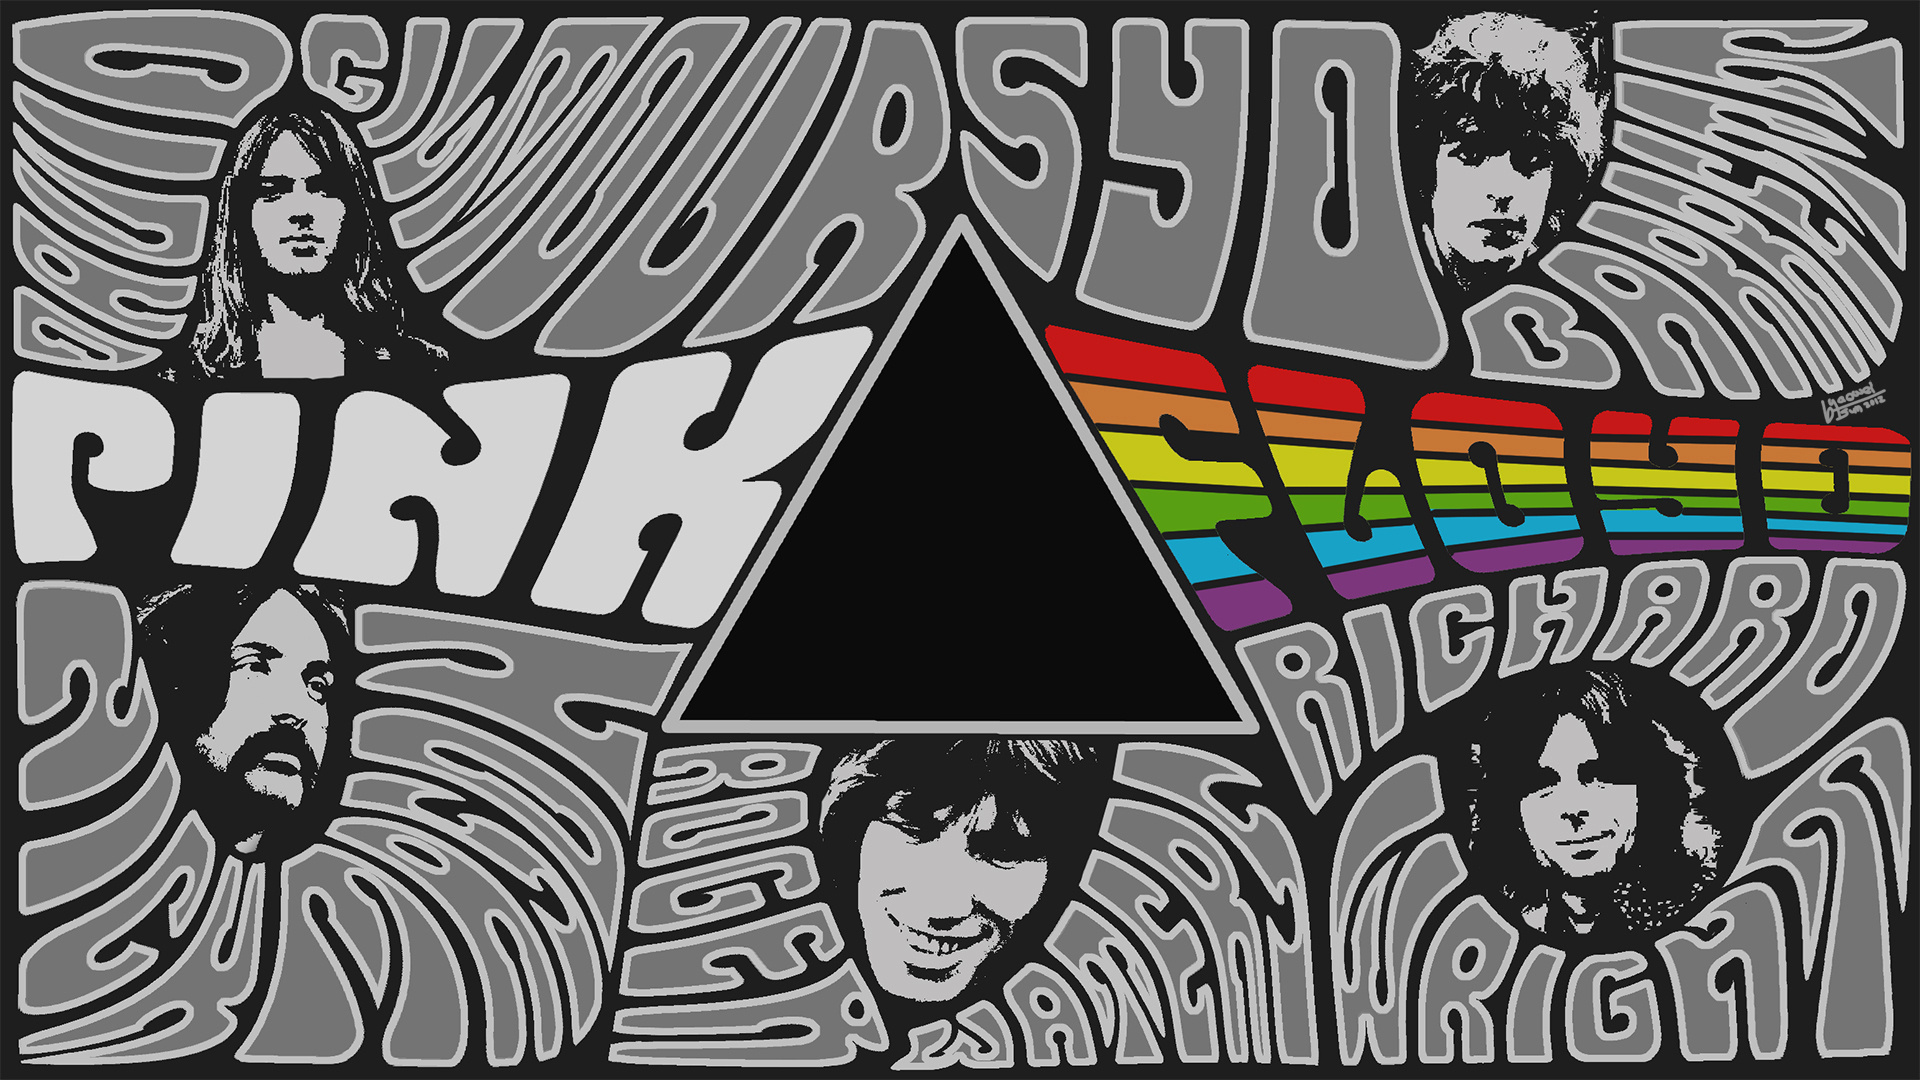 pink, Floyd, Hard, Rock, Classic, Retro, Bands, Groups, Album, Covers, Logo Wallpaper